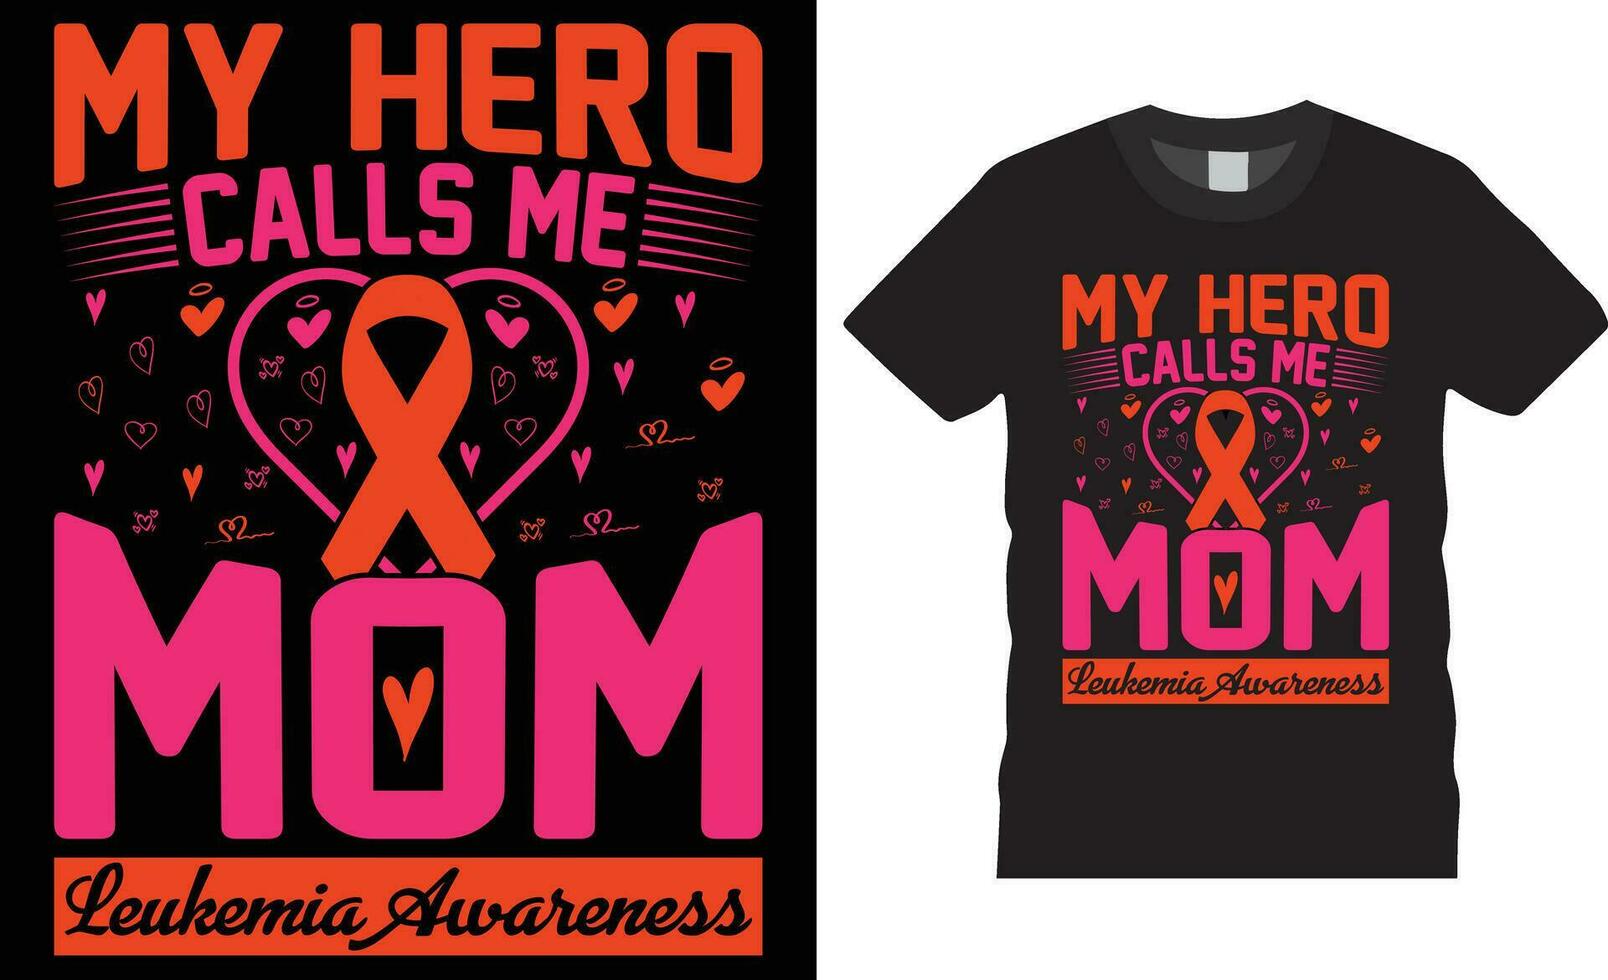 Leukemia awareness Typography t shirt design print for template.My hero calls me mom leukemia Awareness vector